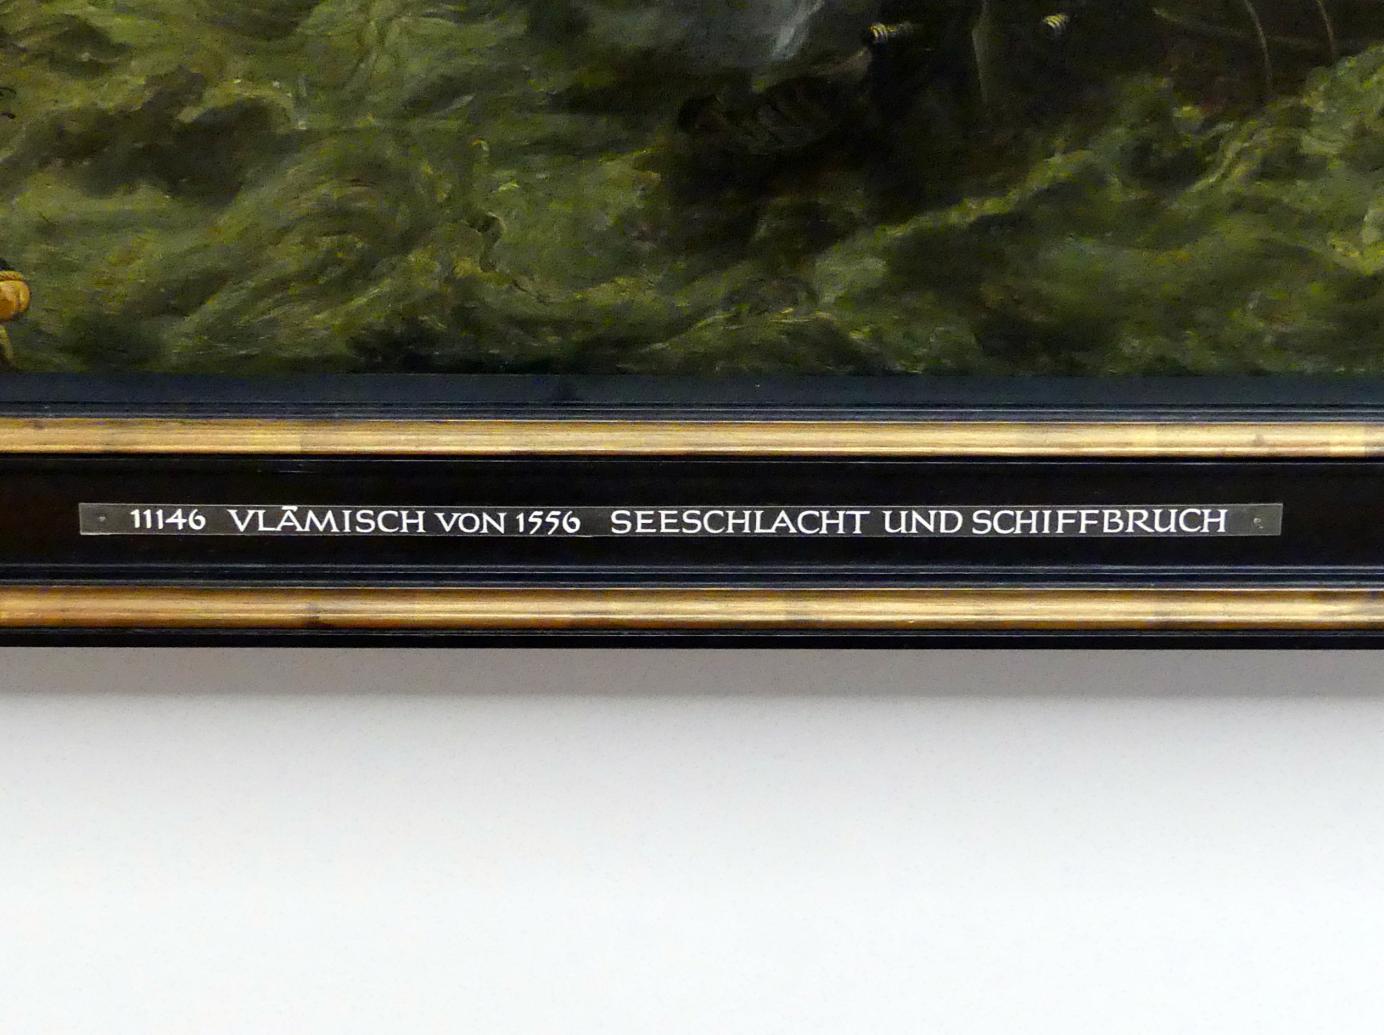 Seeschlacht und Schiffbruch, München, Alte Pinakothek, Erdgeschoss Kabinett 1-3, 1556, Bild 2/2